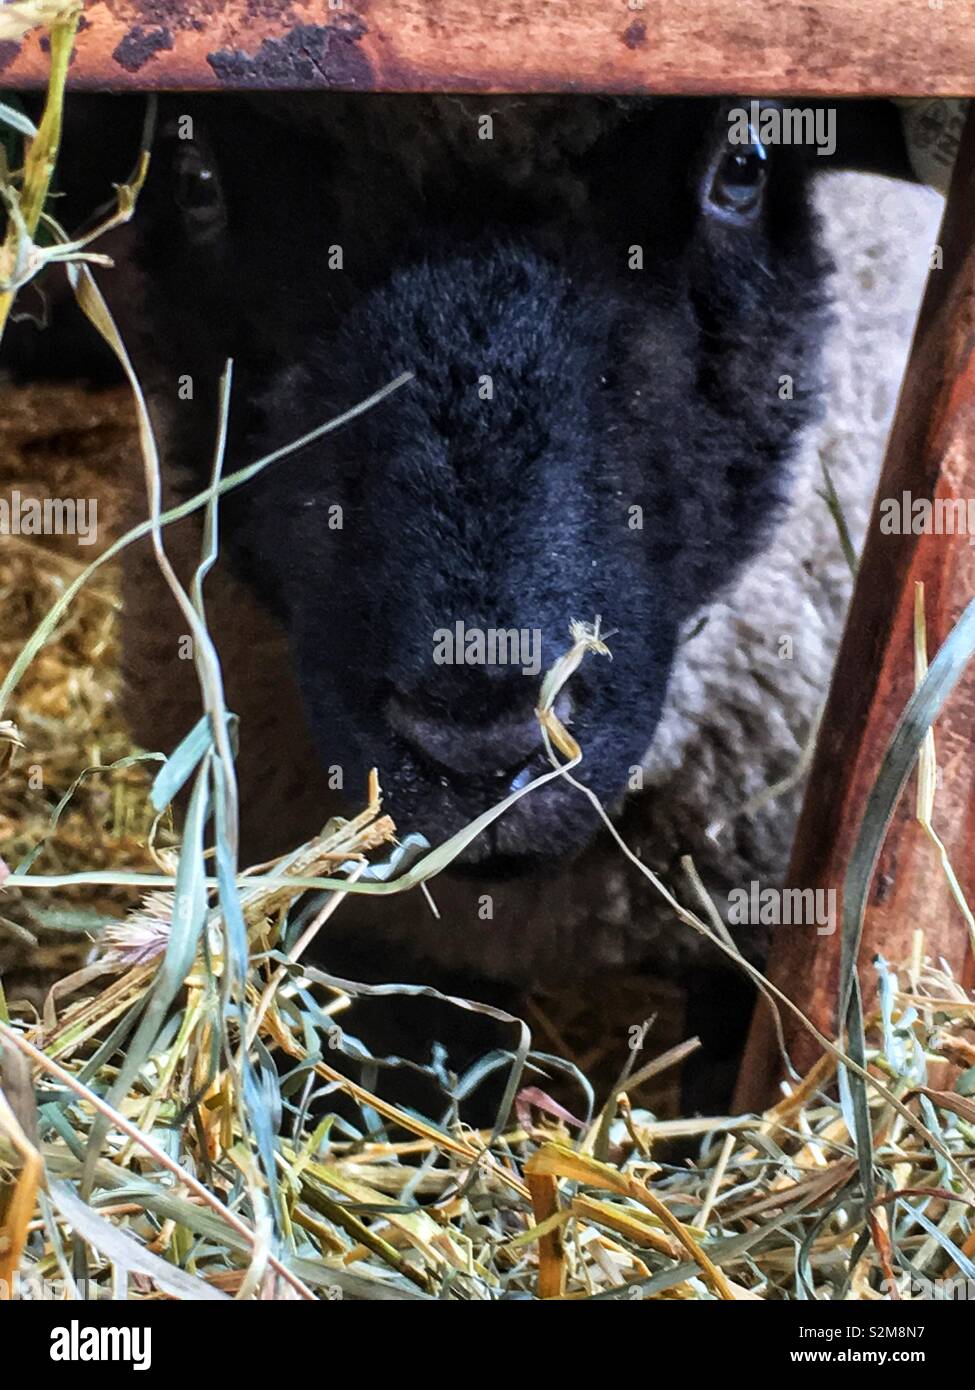 Shy sheep peeking thru the wooden slats if its play pen. Stock Photo